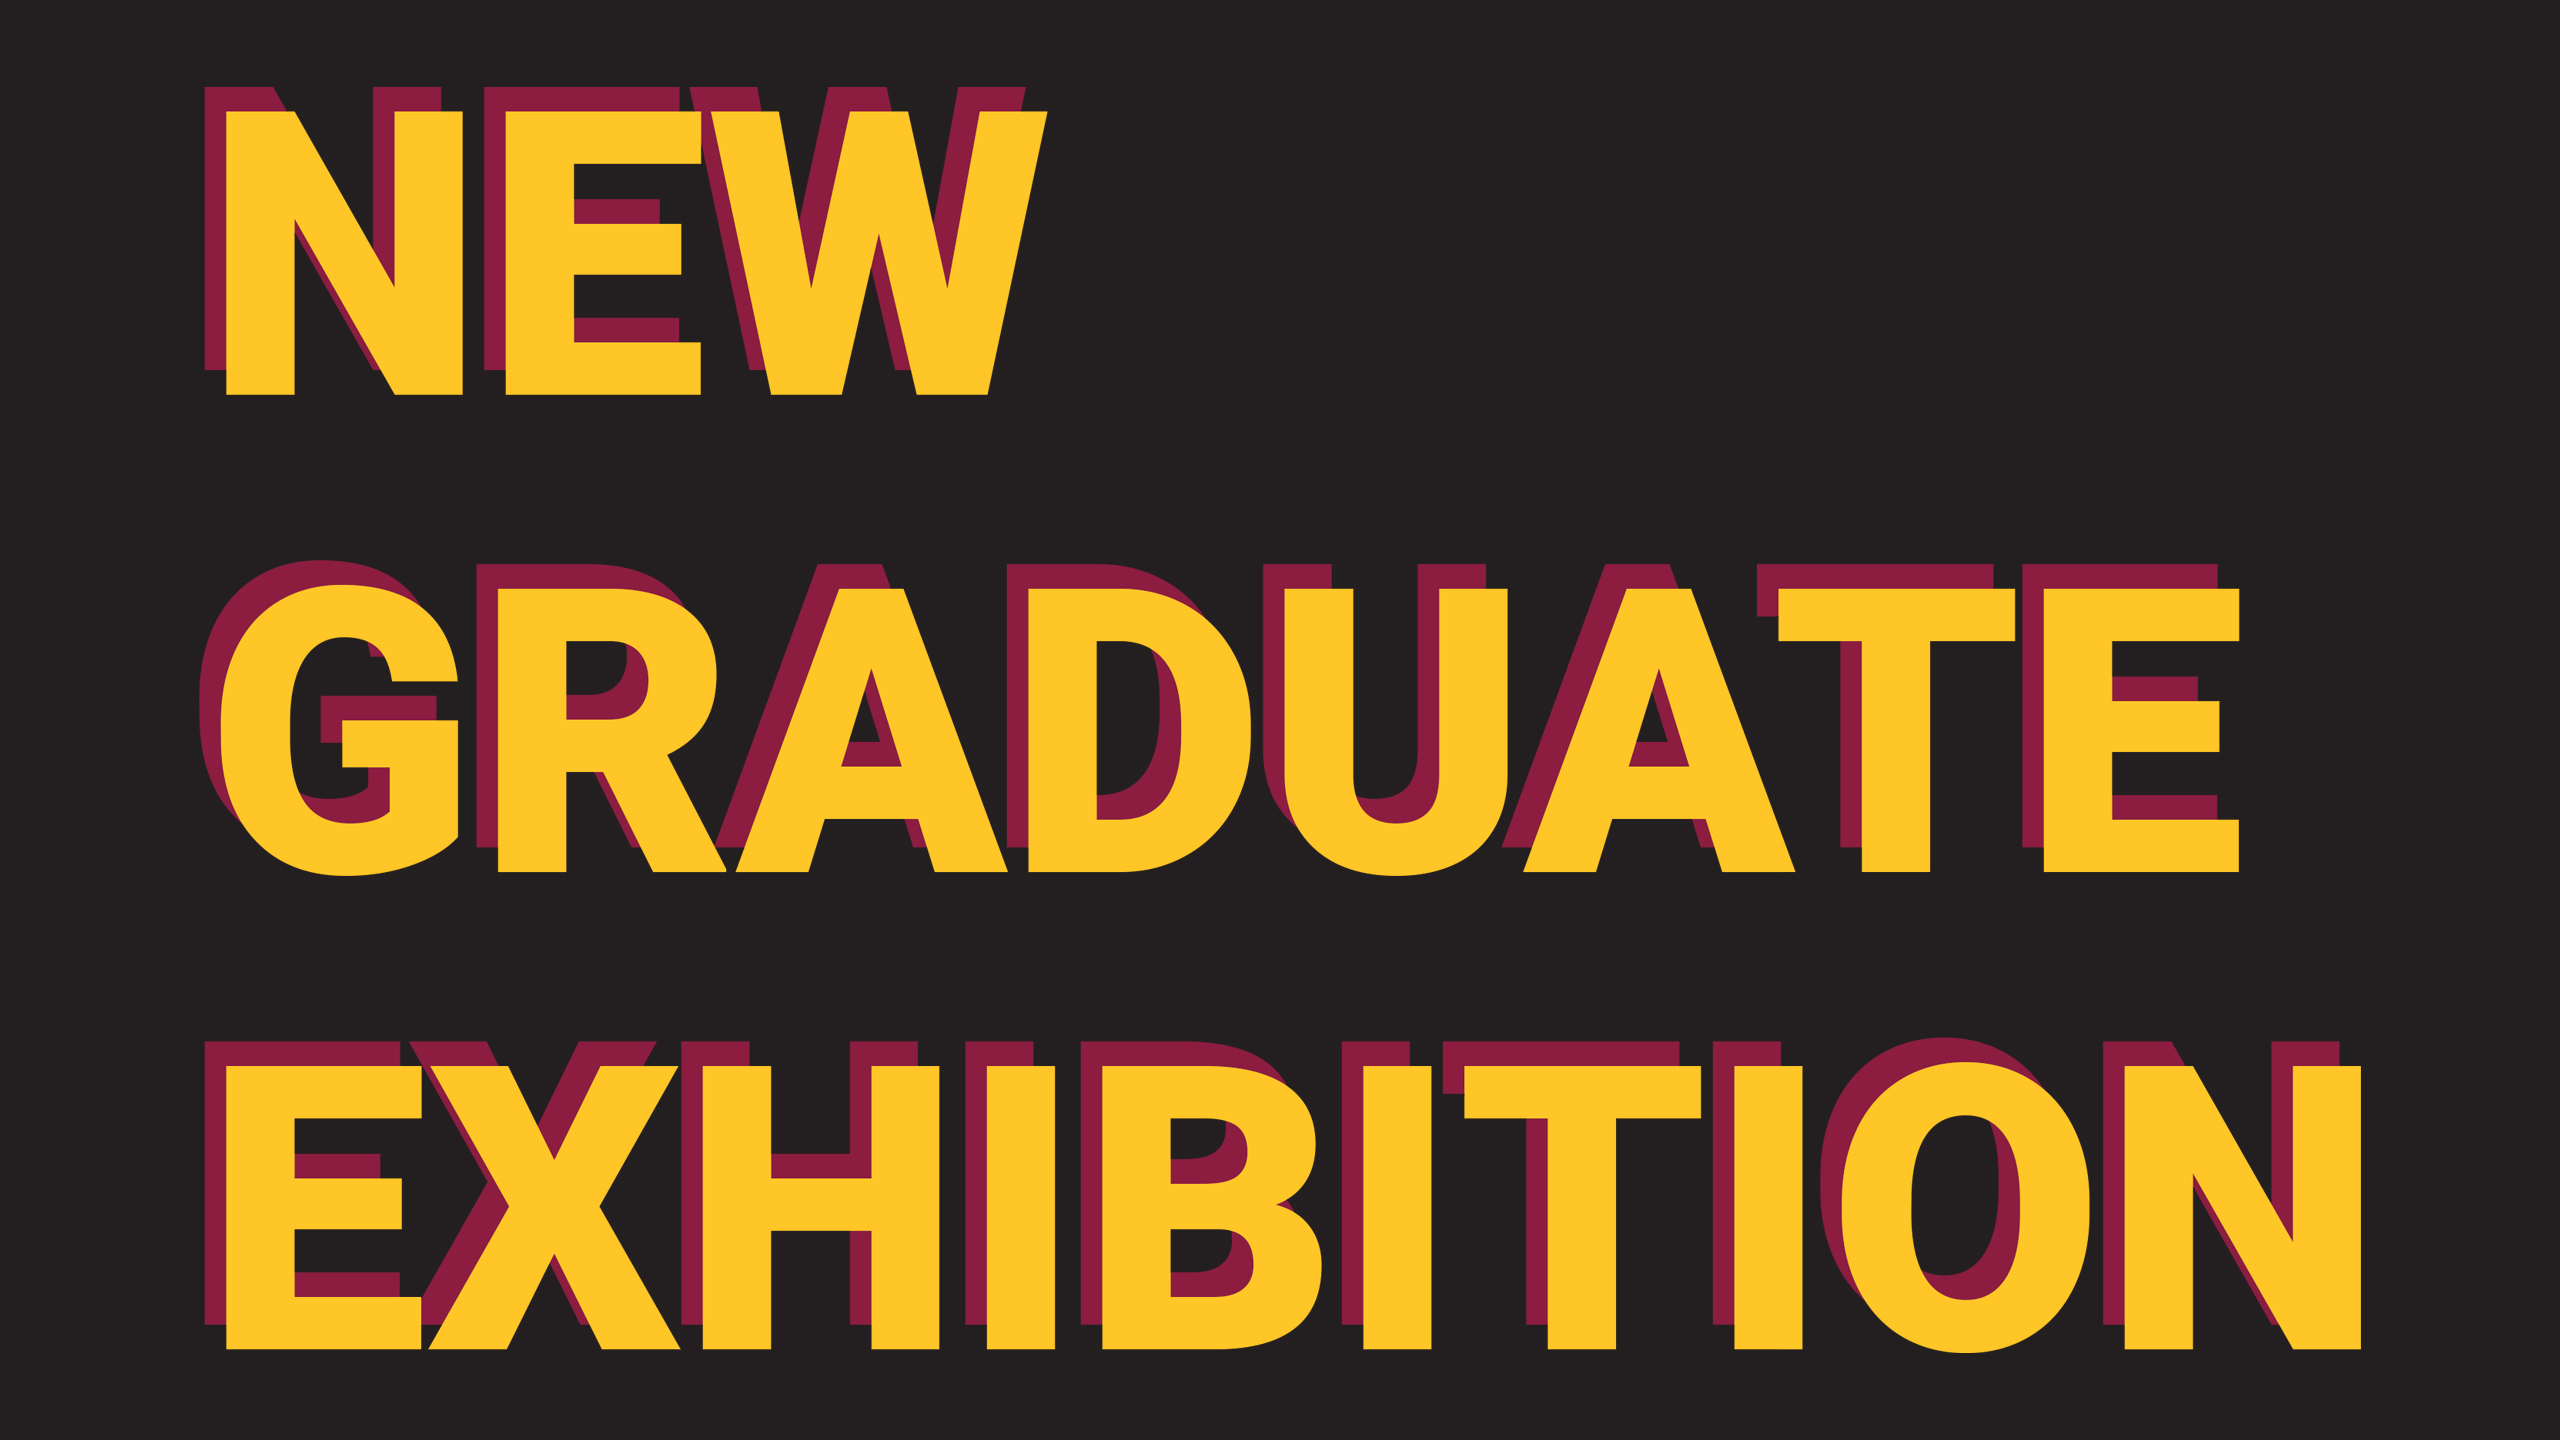 New Graduate Exhibition